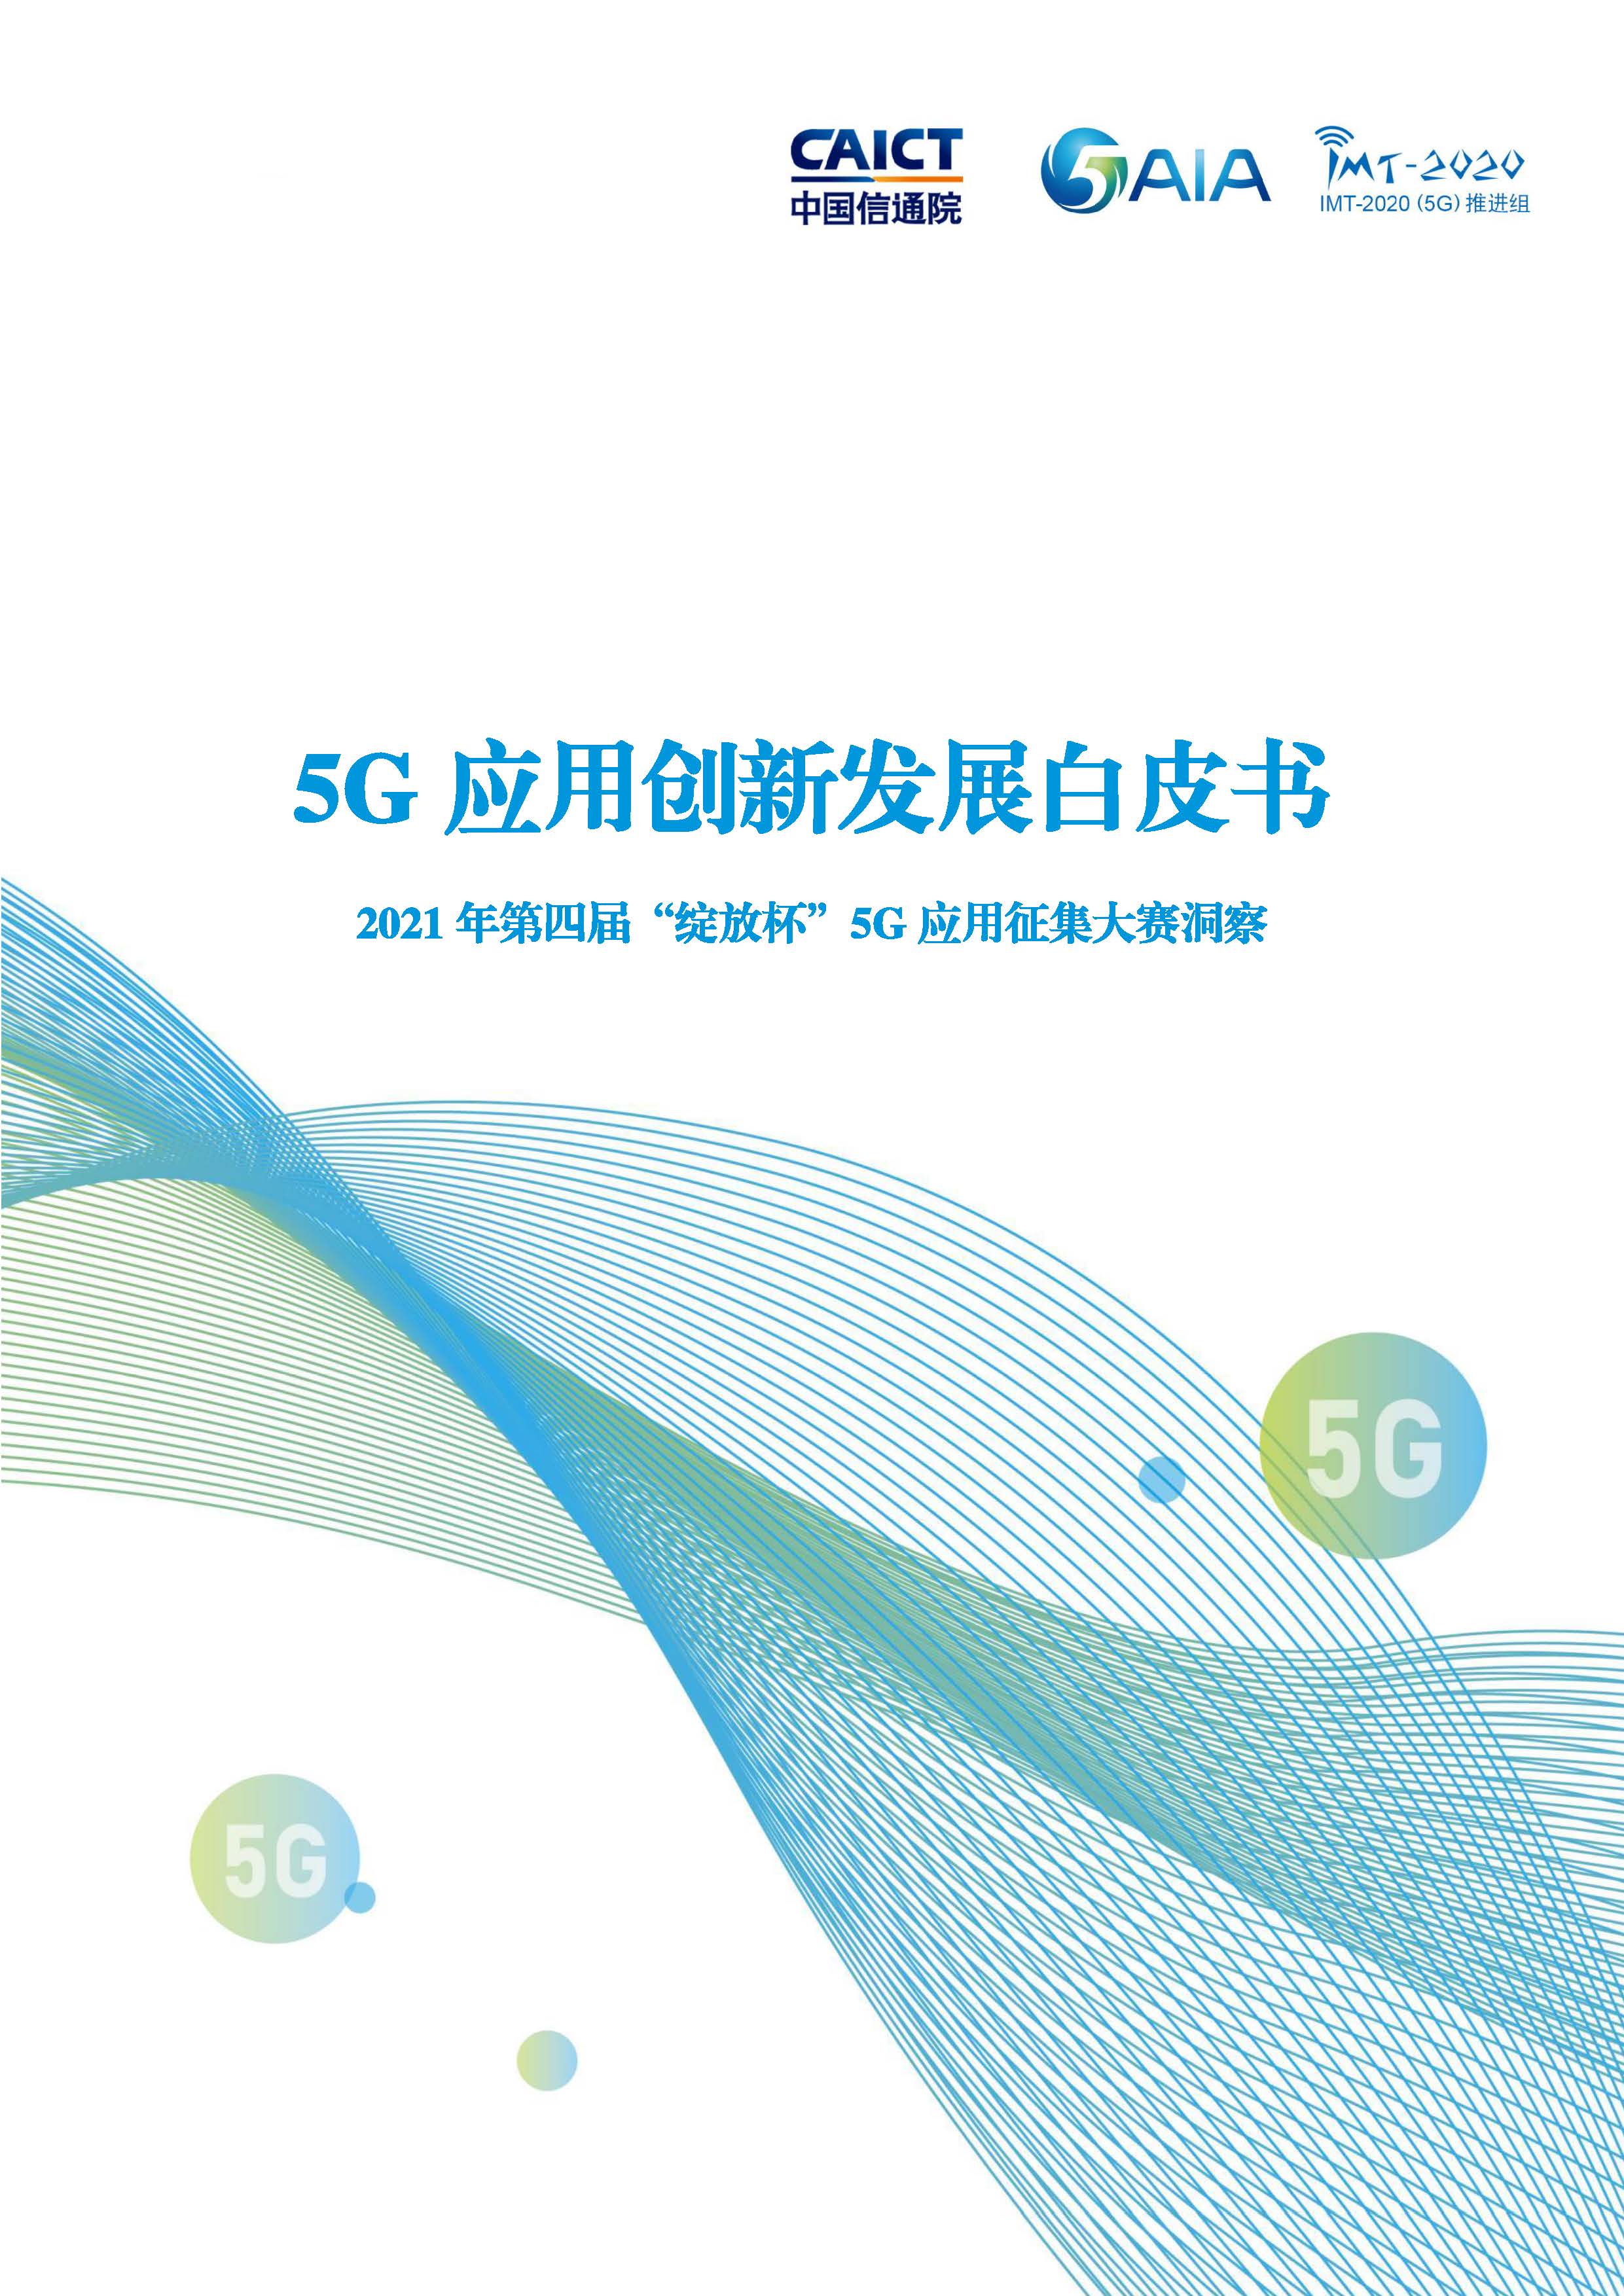 5G应用创新发展白皮书首页.jpg